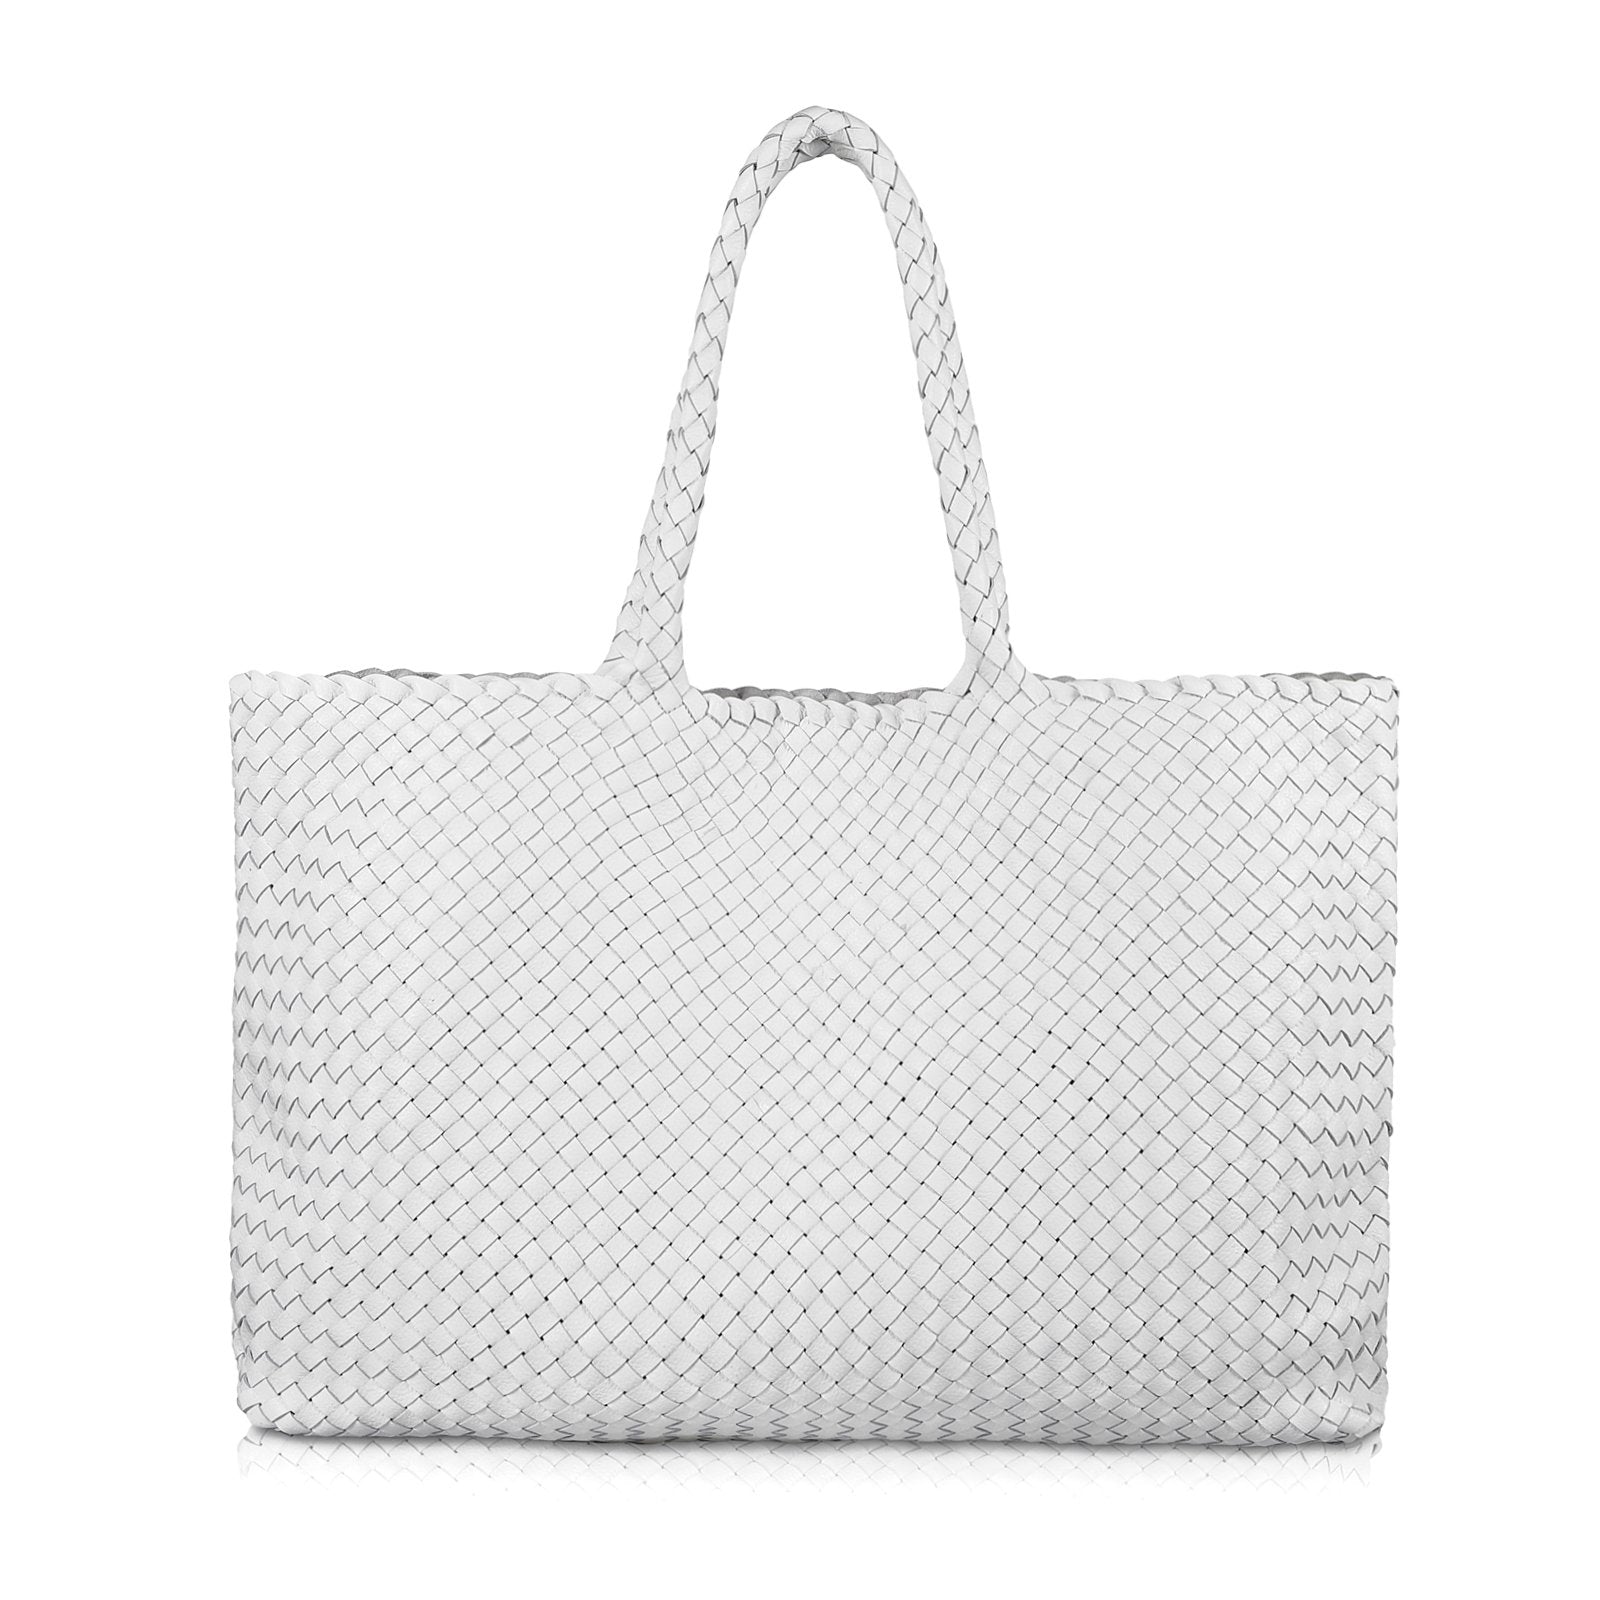 The Travel Elena Woven Handbag in White Nappa Leather